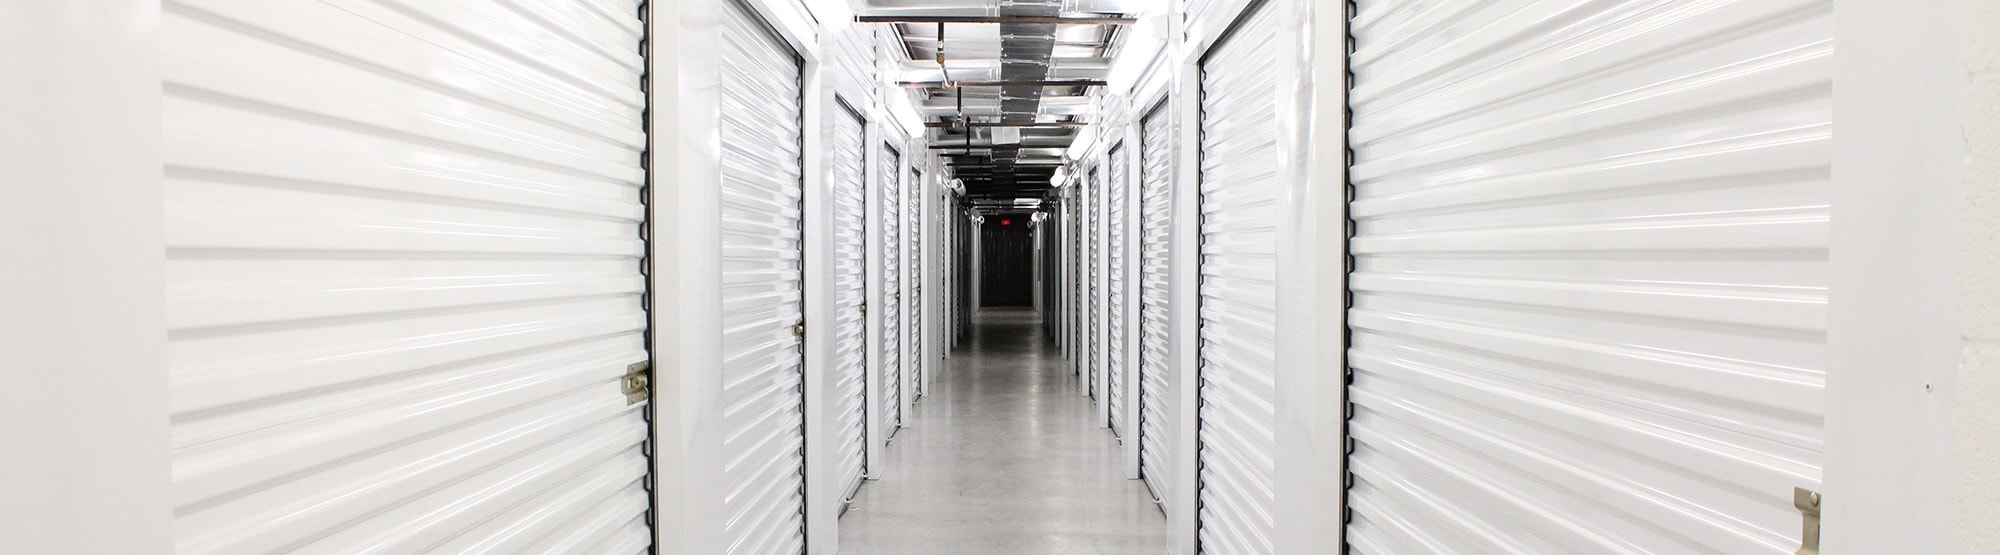 Hallway of self storage units in Haw River, North Carolina